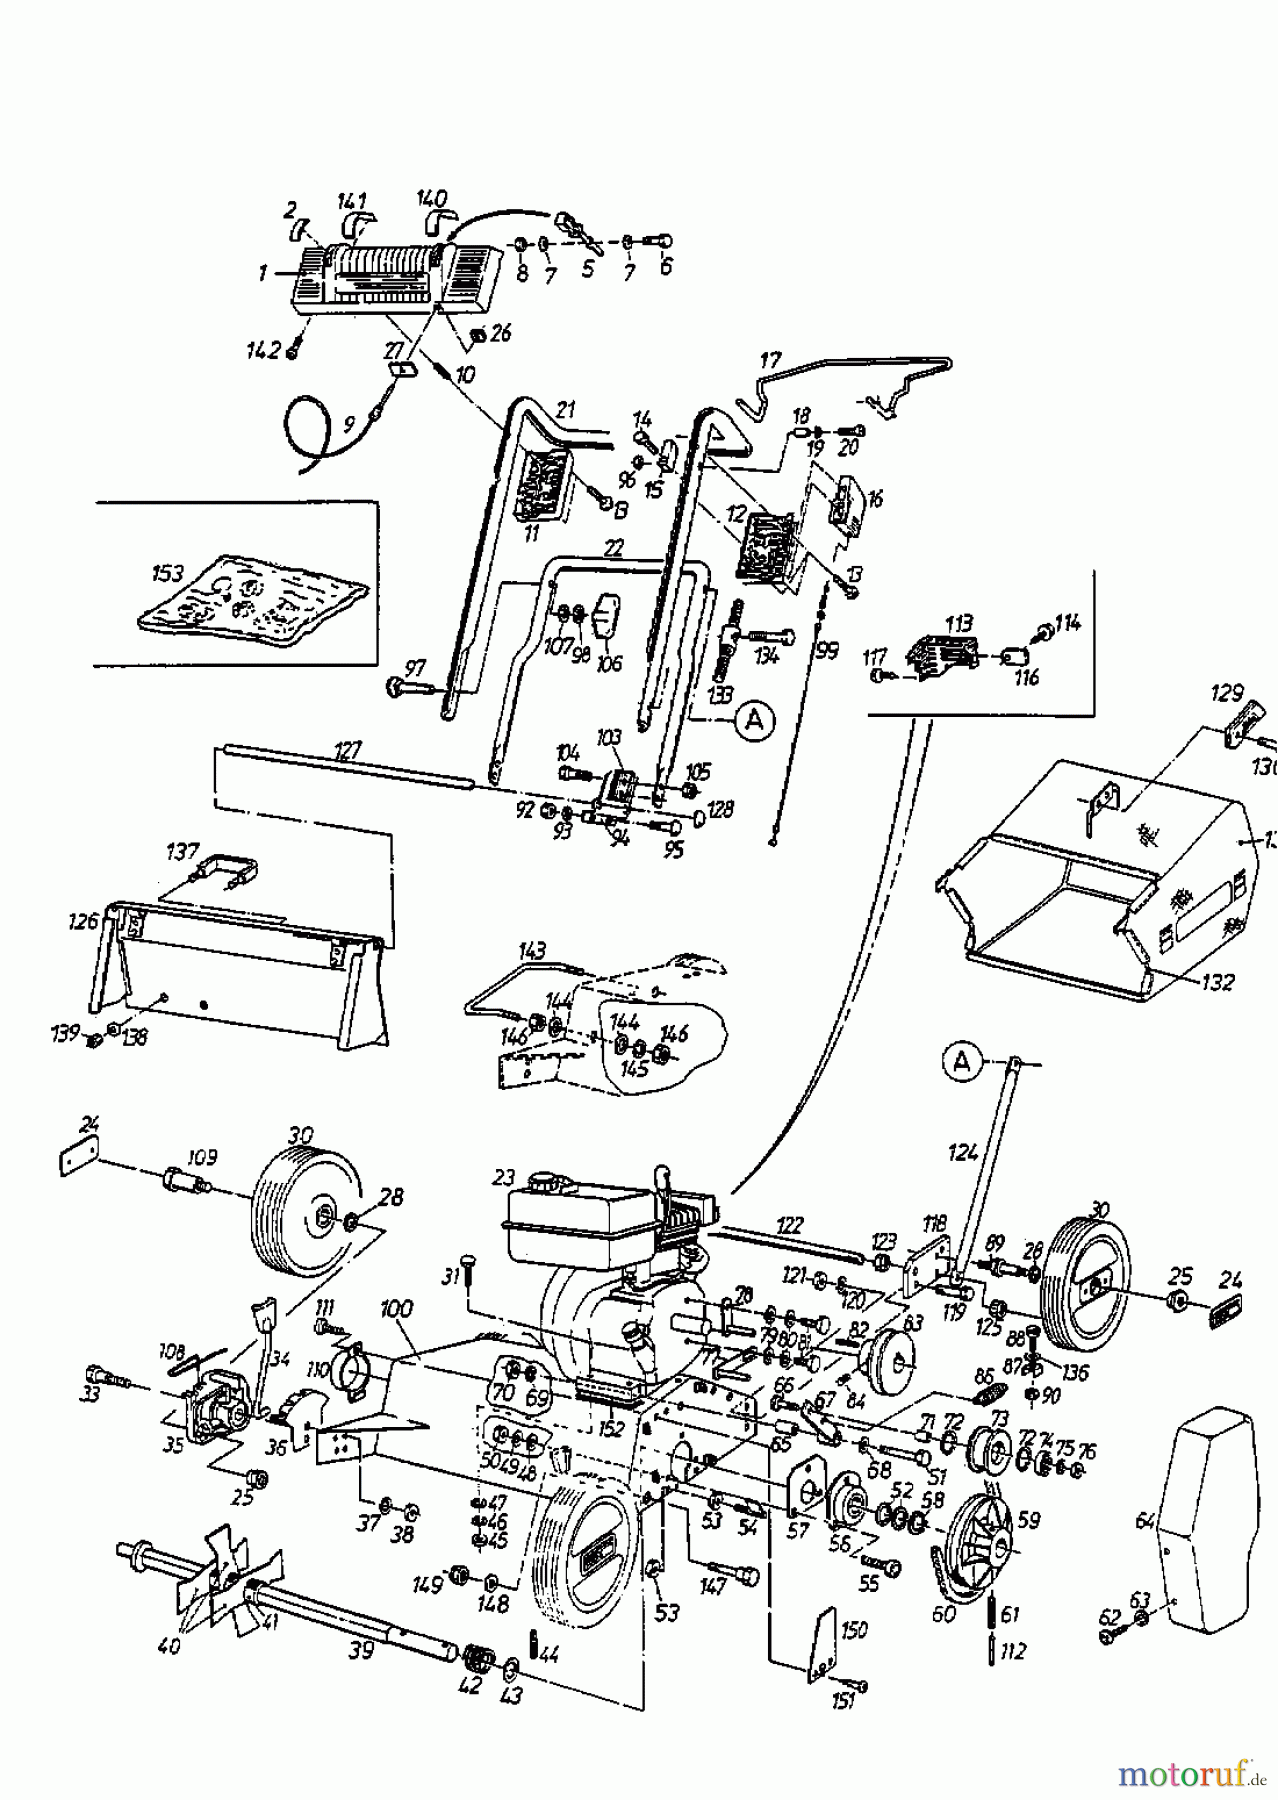  Gutbrod Motorvertikutierer MV 404 16APL01U604  (1998) Grundgerät